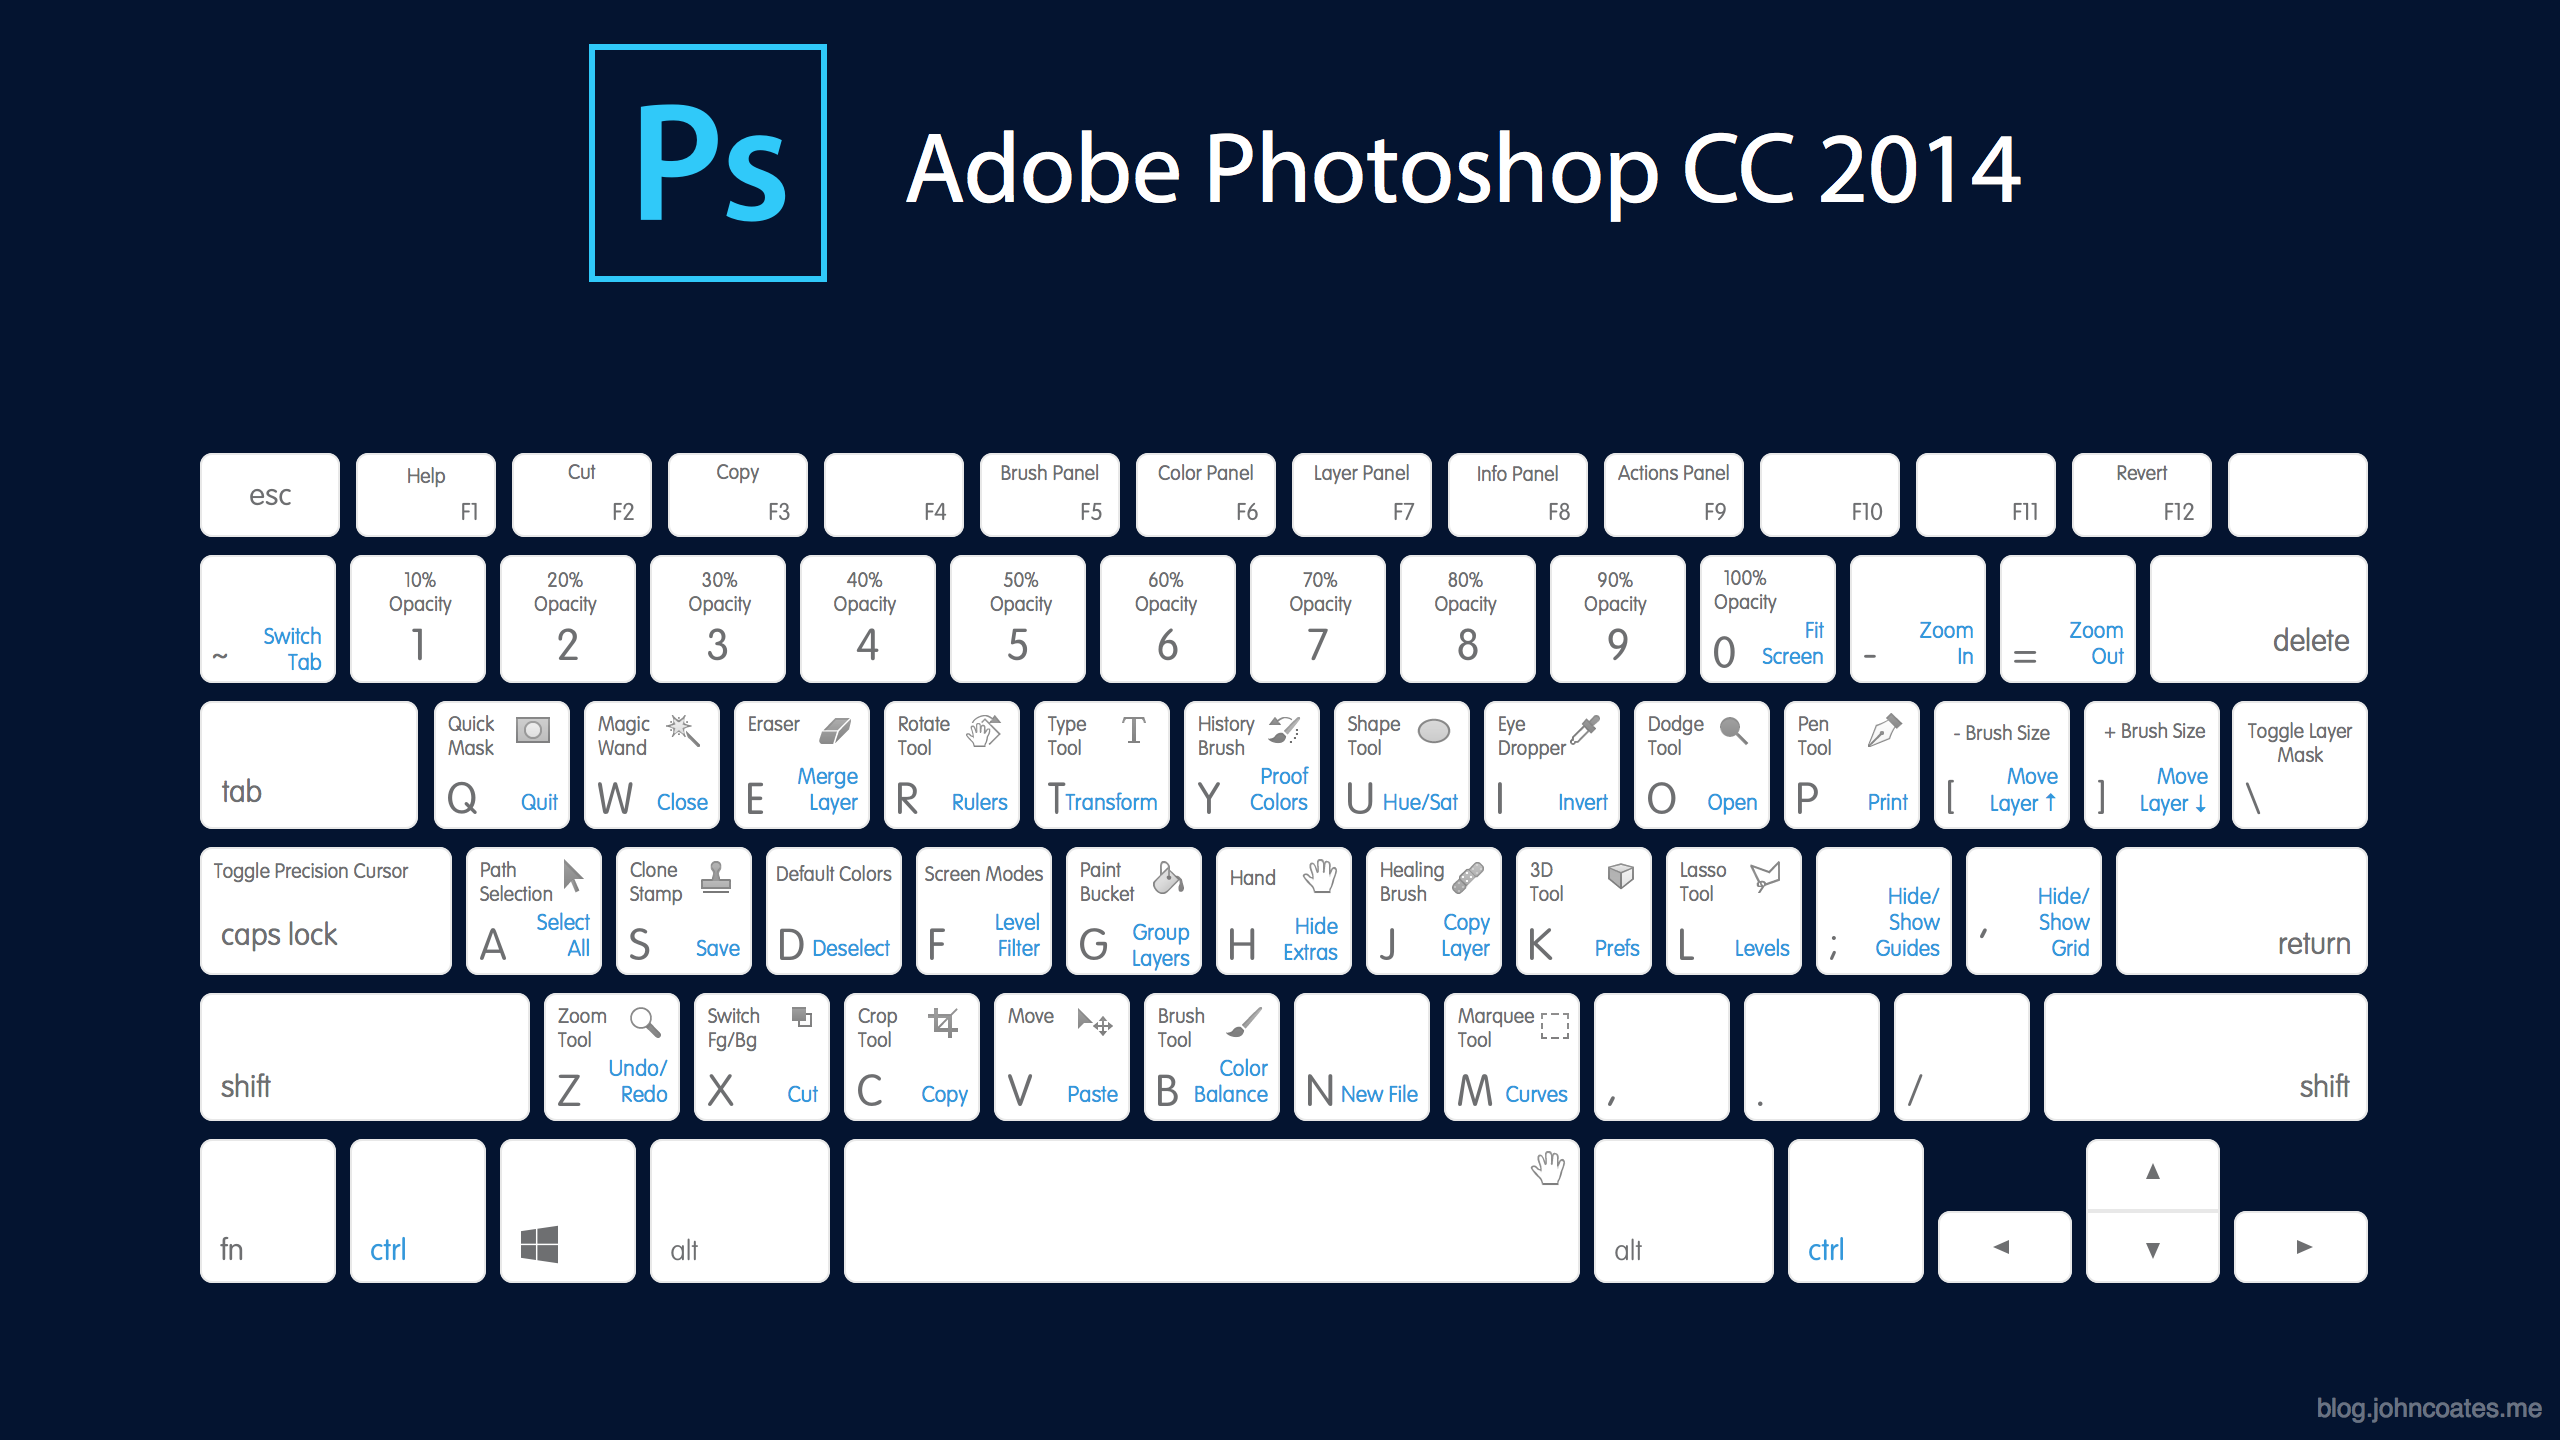 Adobe-Photoshop-CC-2014-Cheat-Sheet-Windows